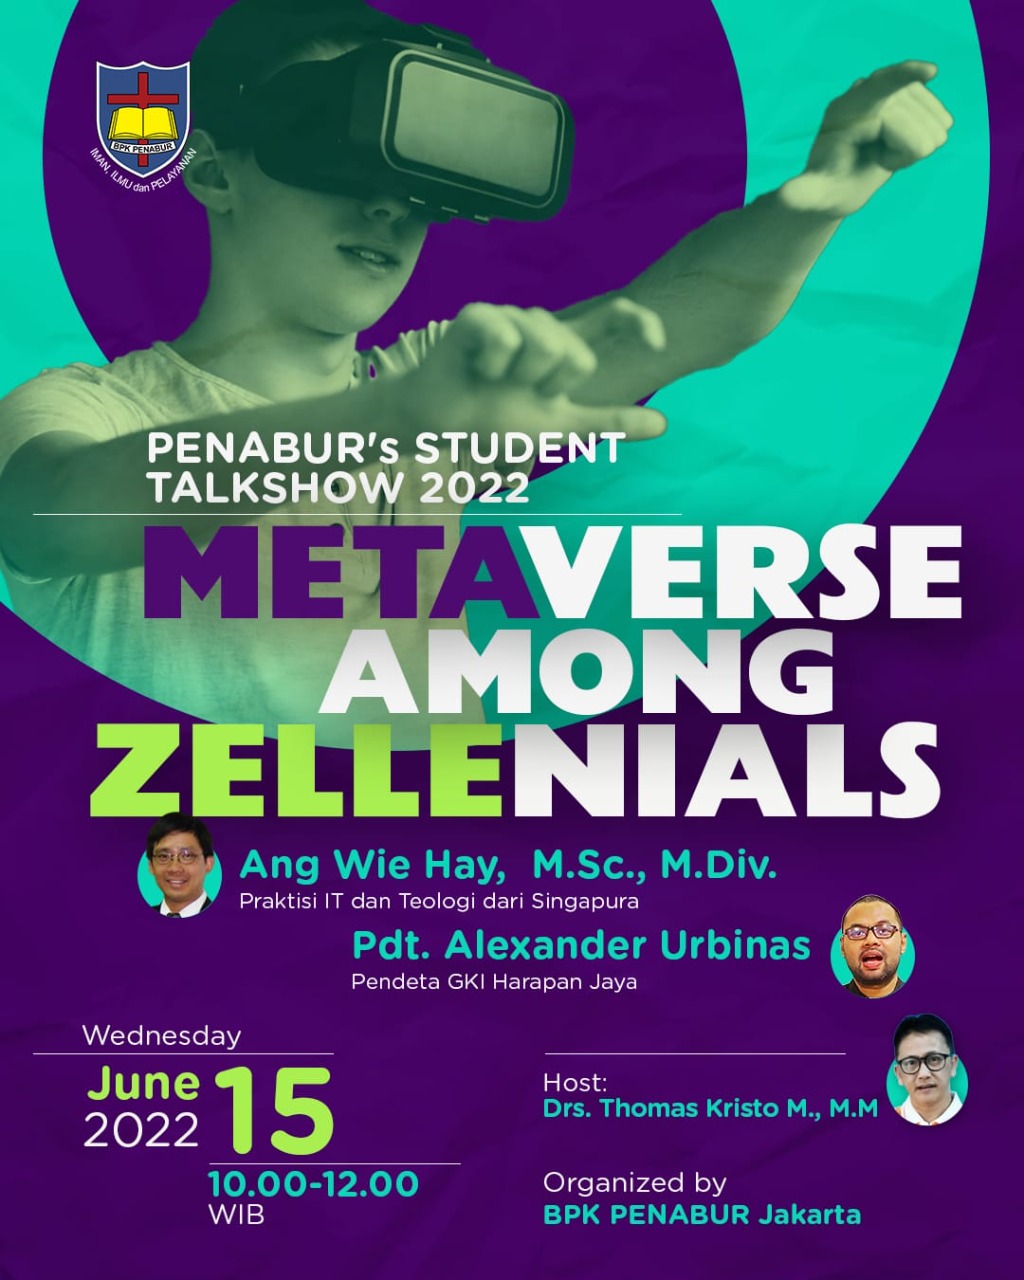 PENABUR's Student Talkshow 2022 - Metaverse Among Zellenials